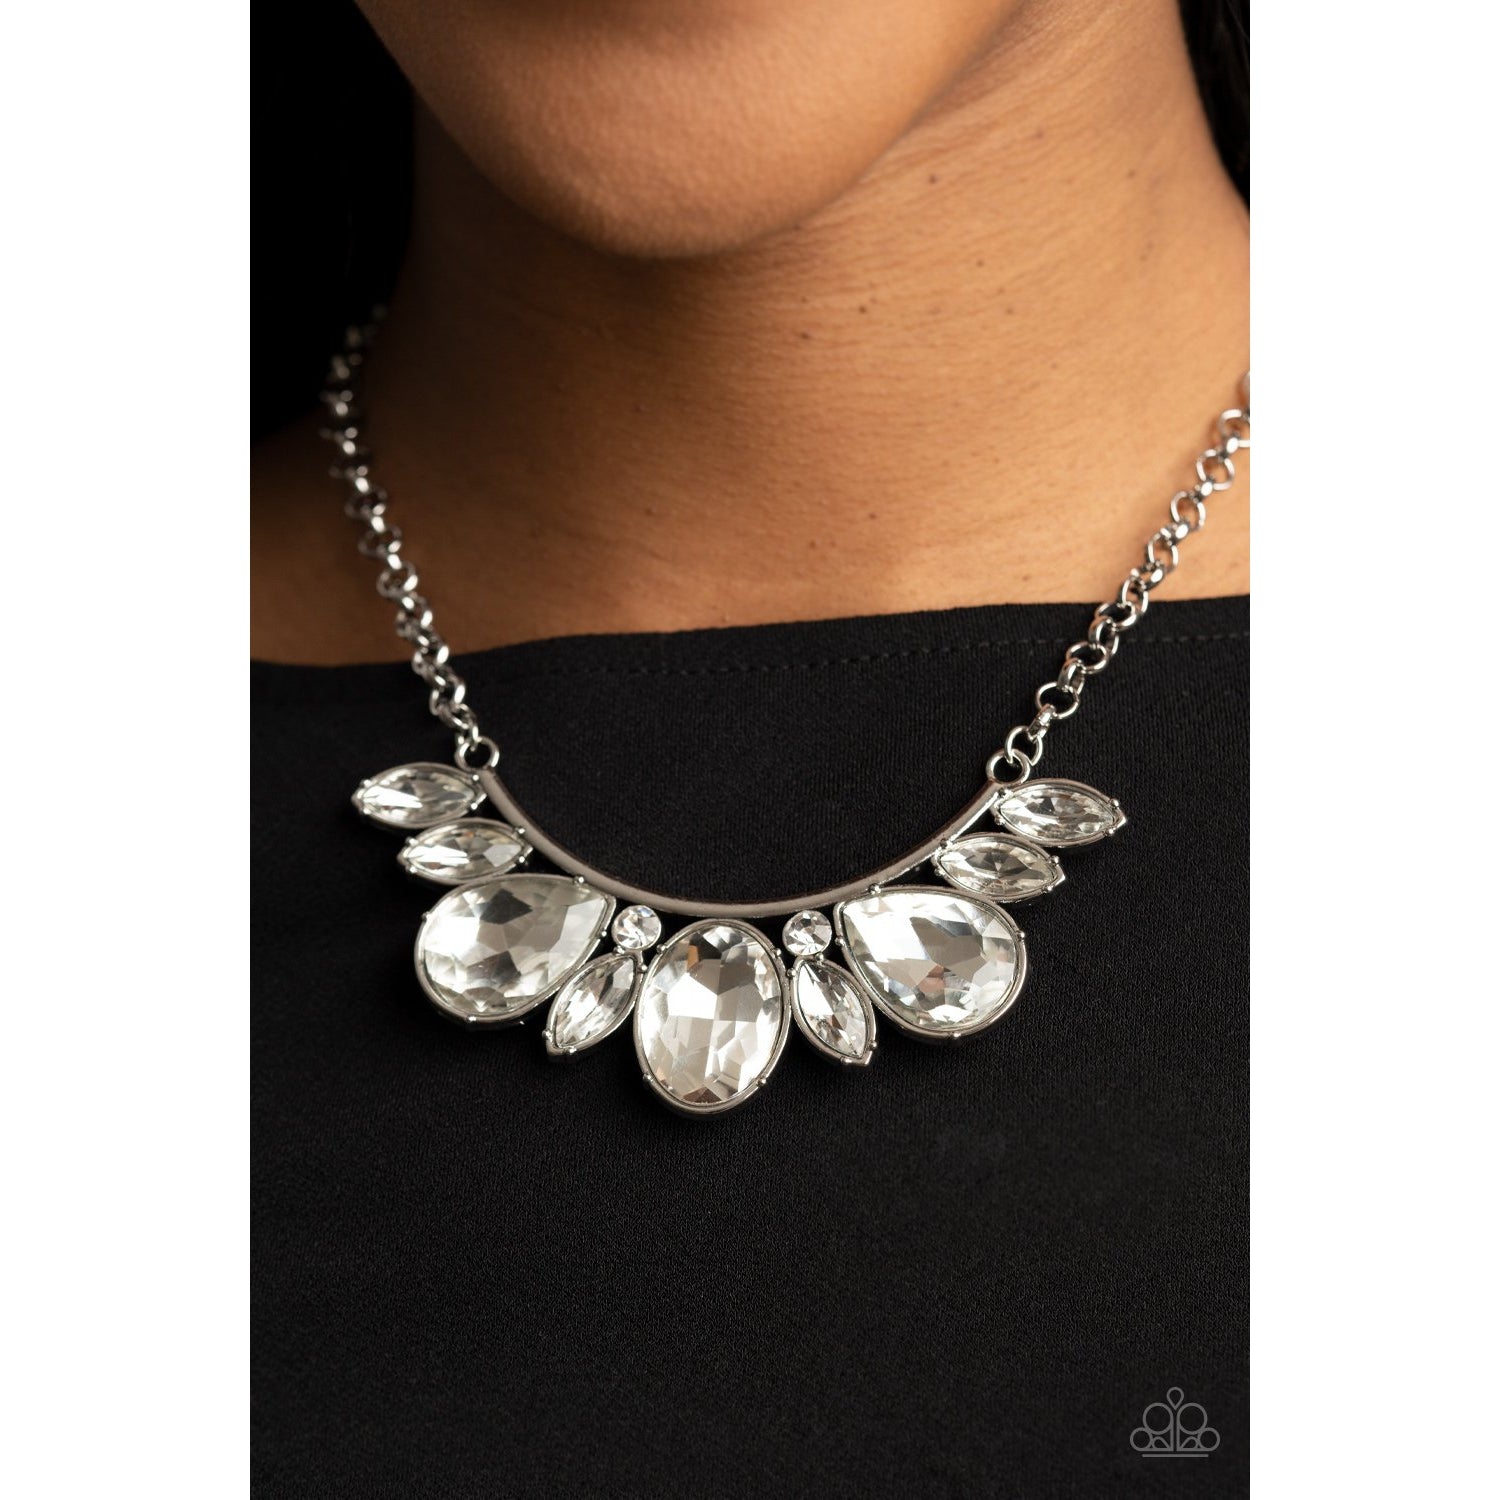 Never SLAY Never - White Rhinestone Necklace - Paparazzi Accessories - GlaMarous Titi Jewels